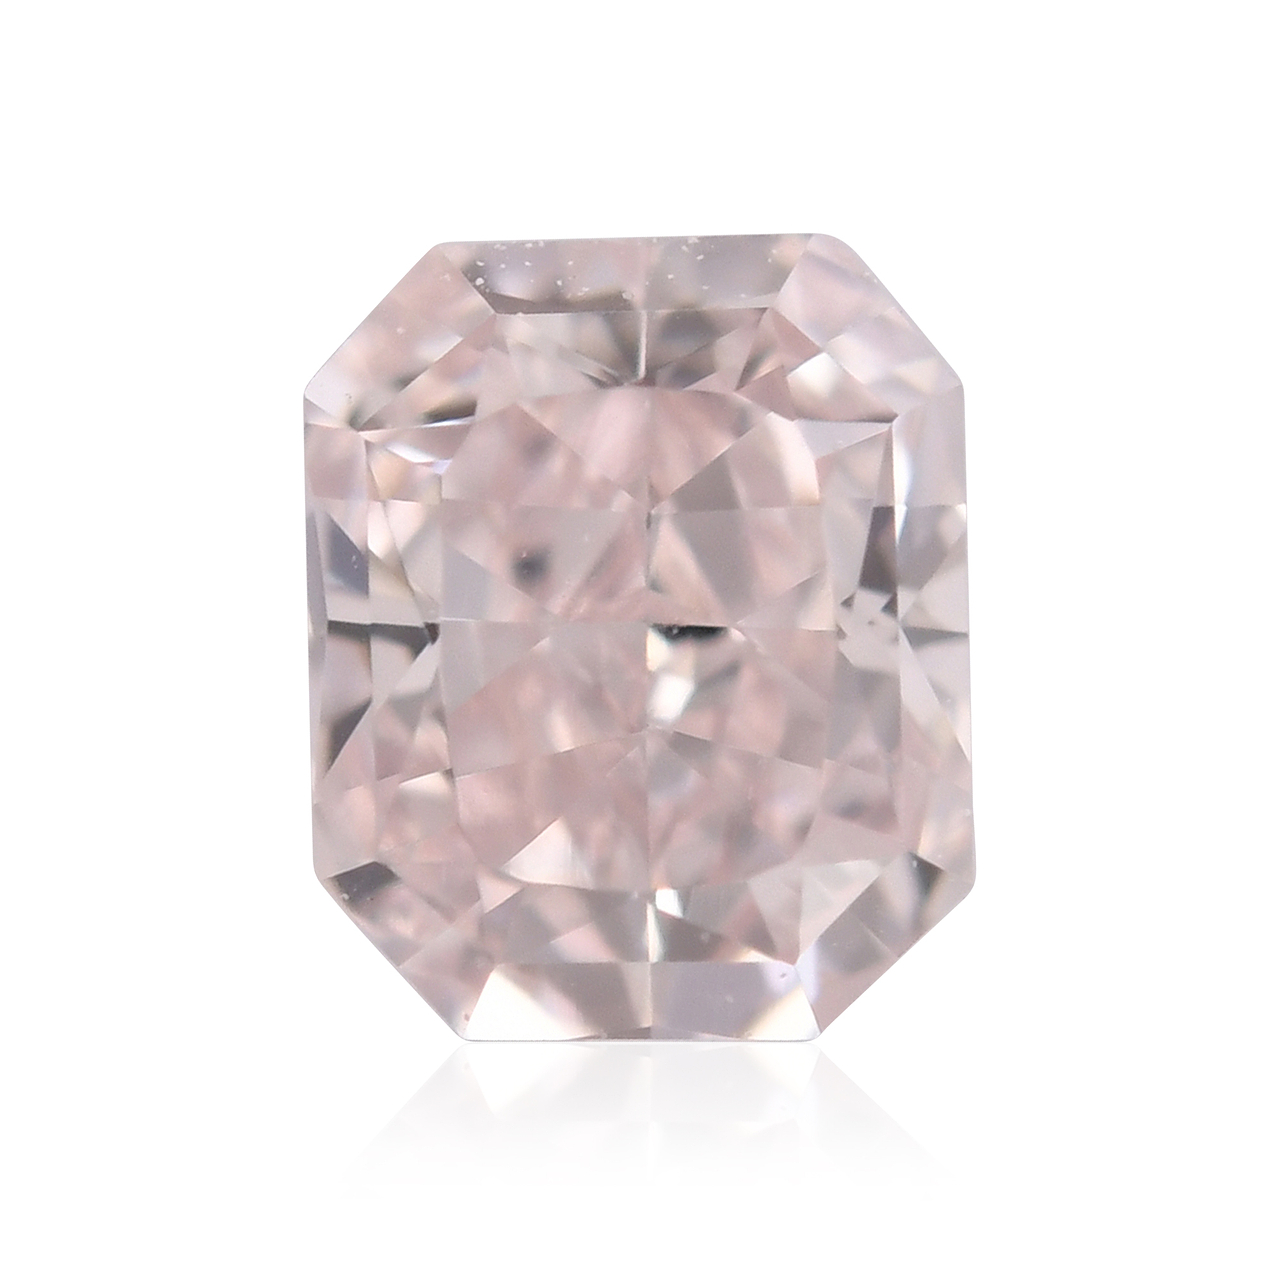 0.14 carat, Fancy Light Orangy Pink Diamond, Radiant Shape, (SI1) Clarity, GIA, SKU